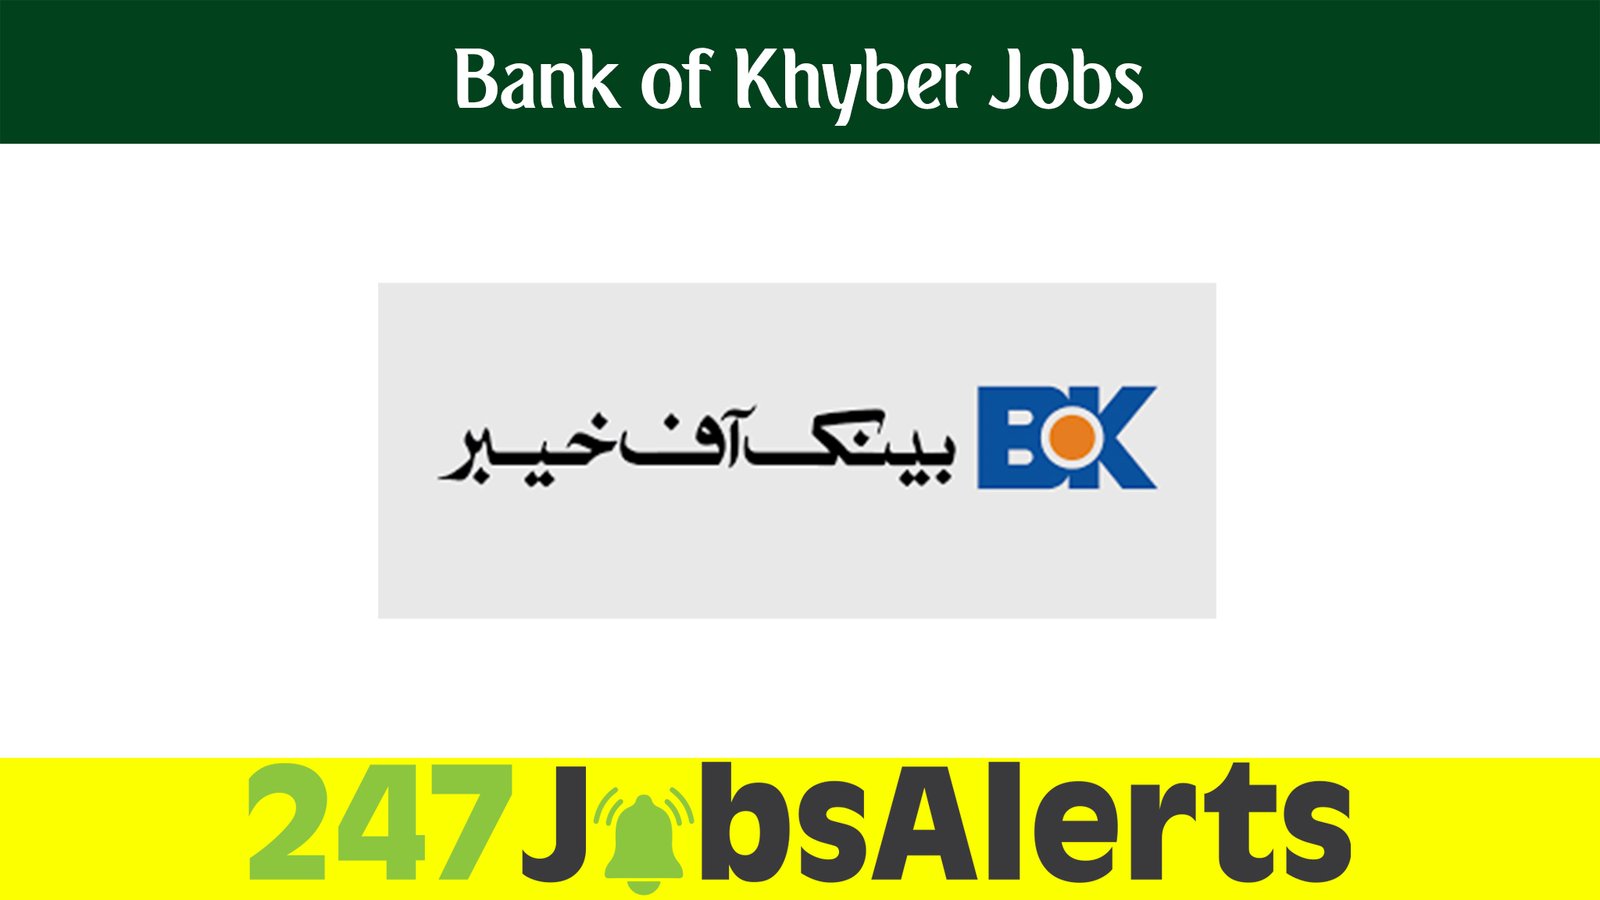 Bank of Khyber Jobs 